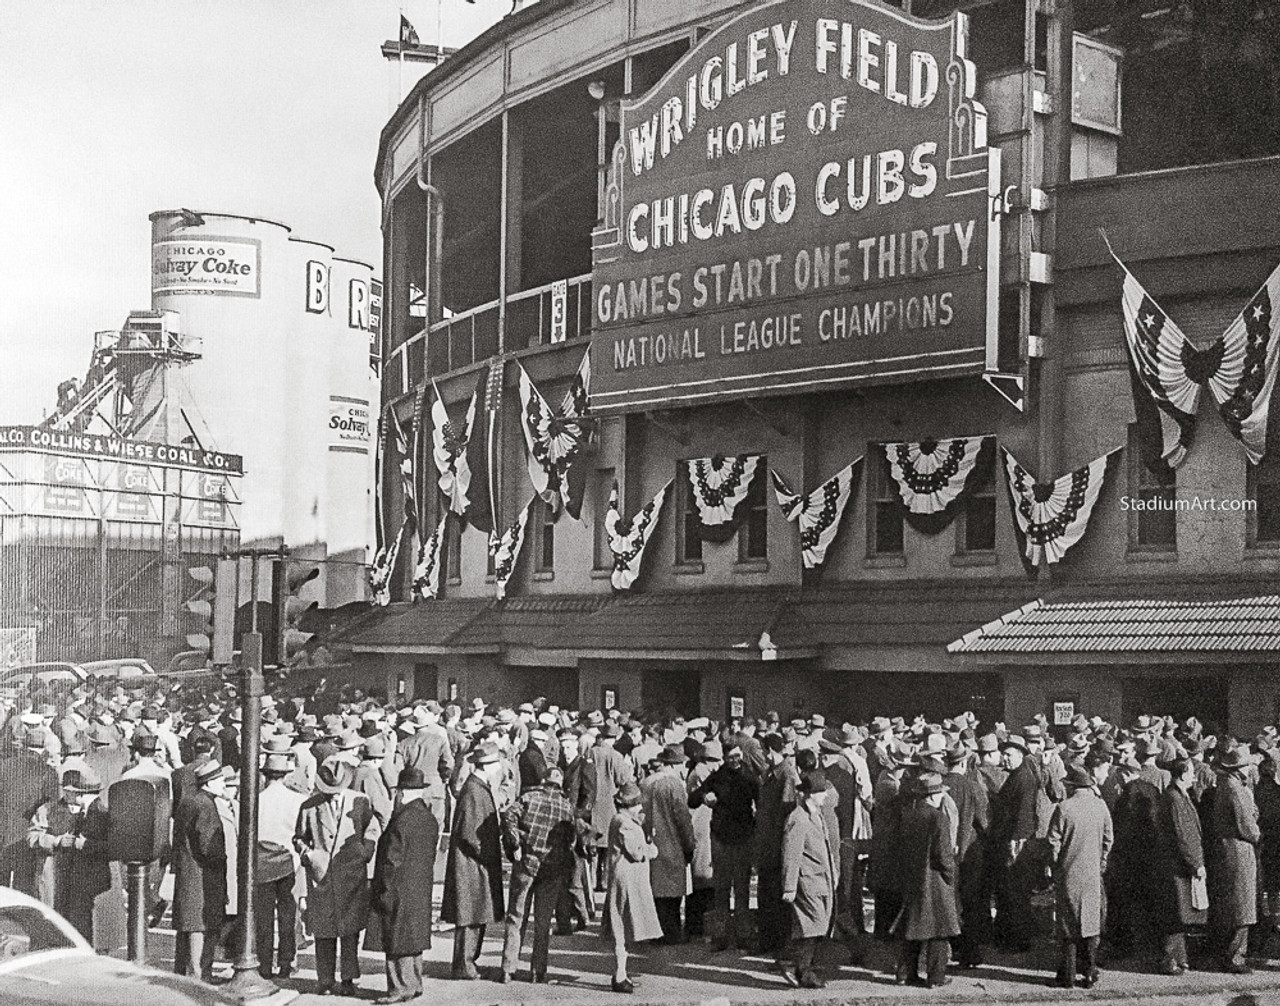 Wrigley Field Baseball Stadium Print, Chicago Cubs Baseball